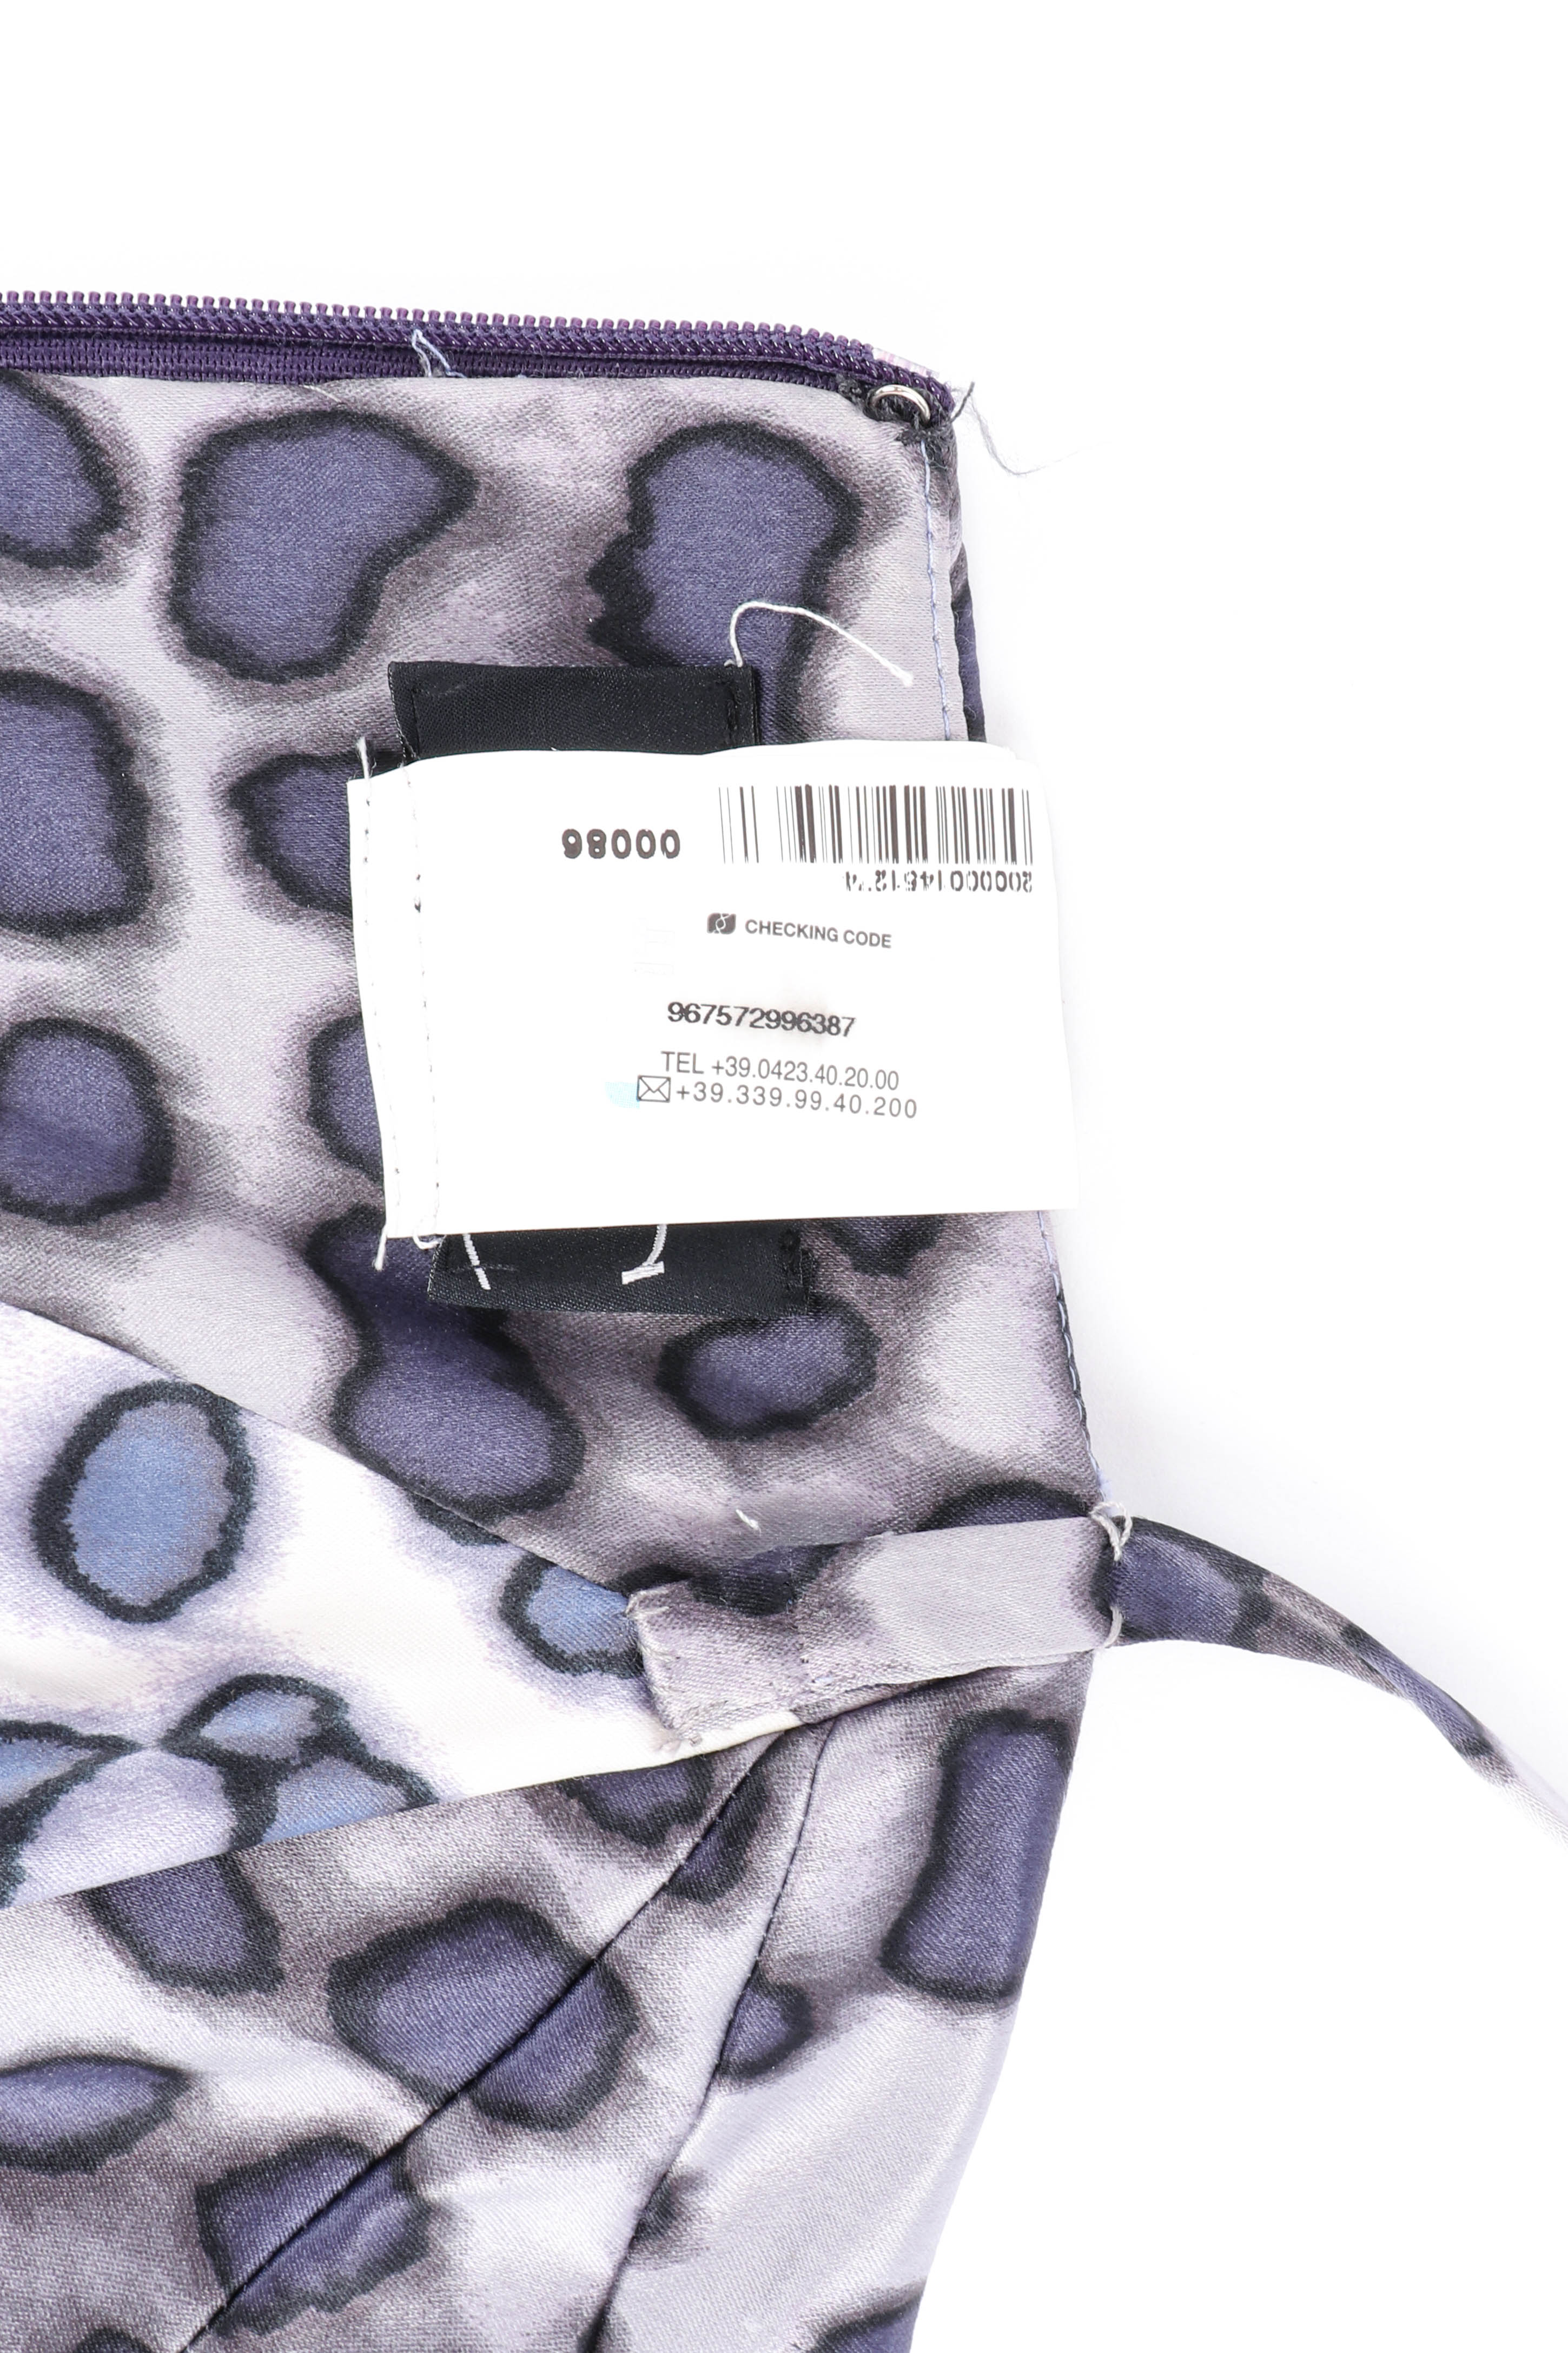 Just Cavalli Leopard Print Mermaid Dress authenticity label @recessla